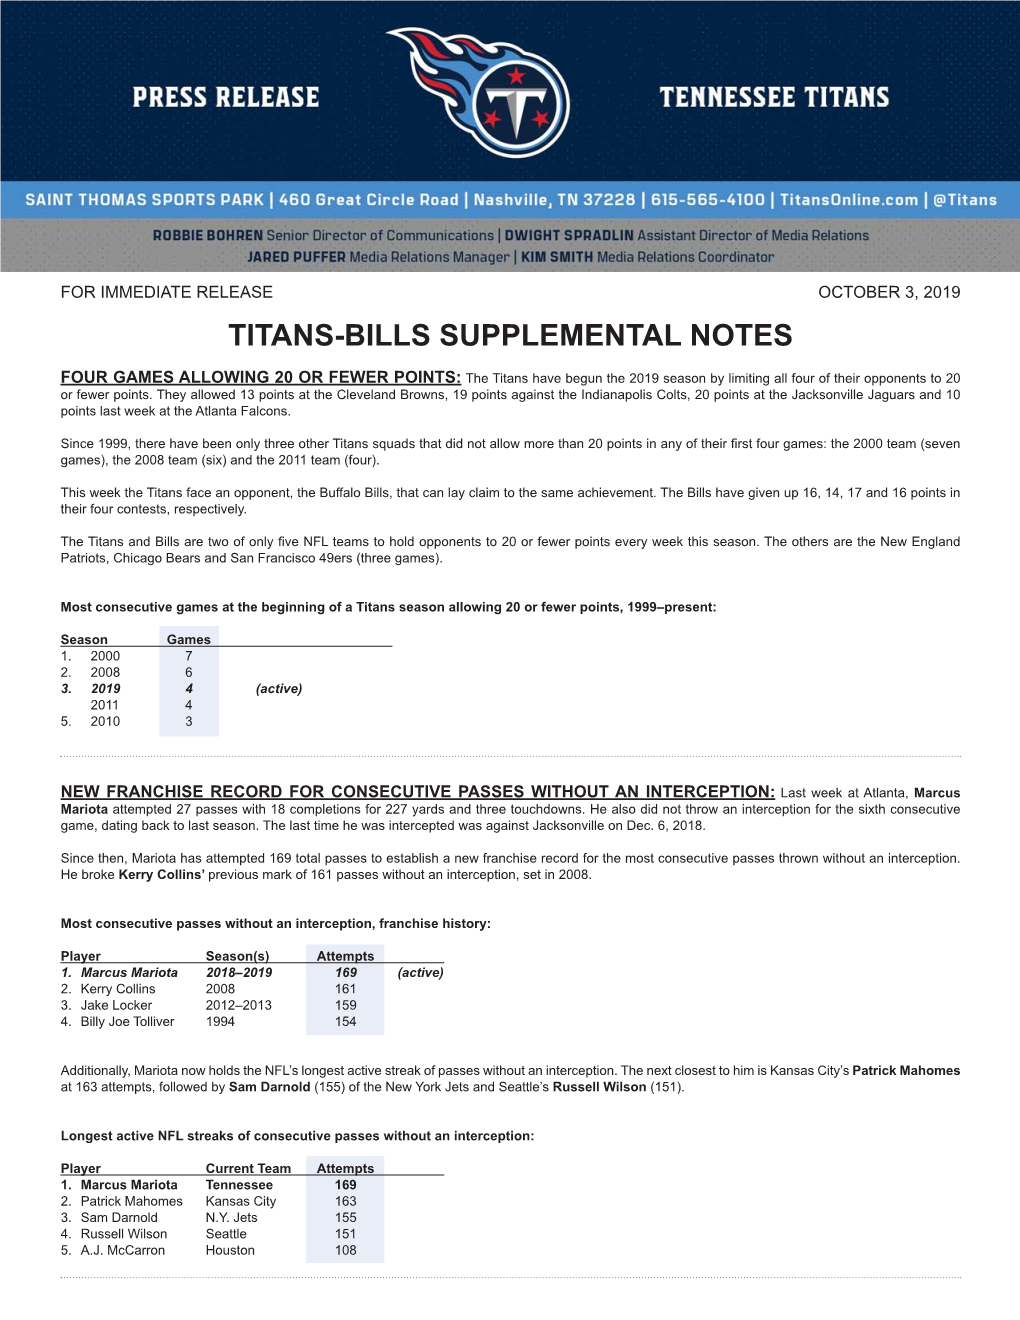 Titans-Bills Supplemental Notes